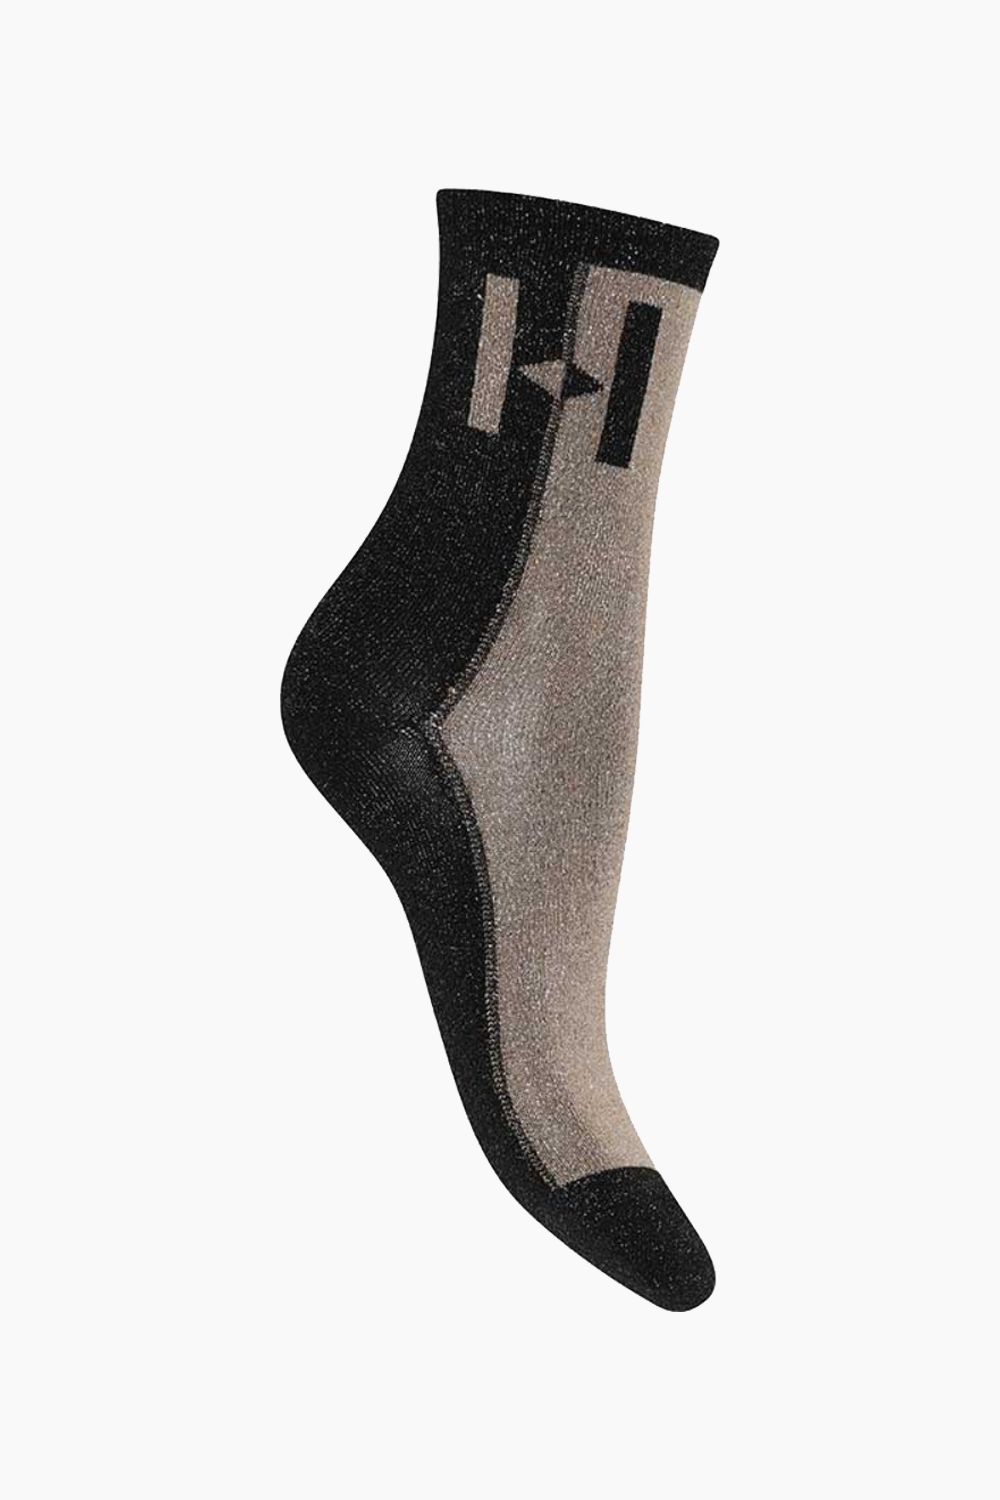 Fashion Sock 9107 - Black/Brown - Hype the Detail